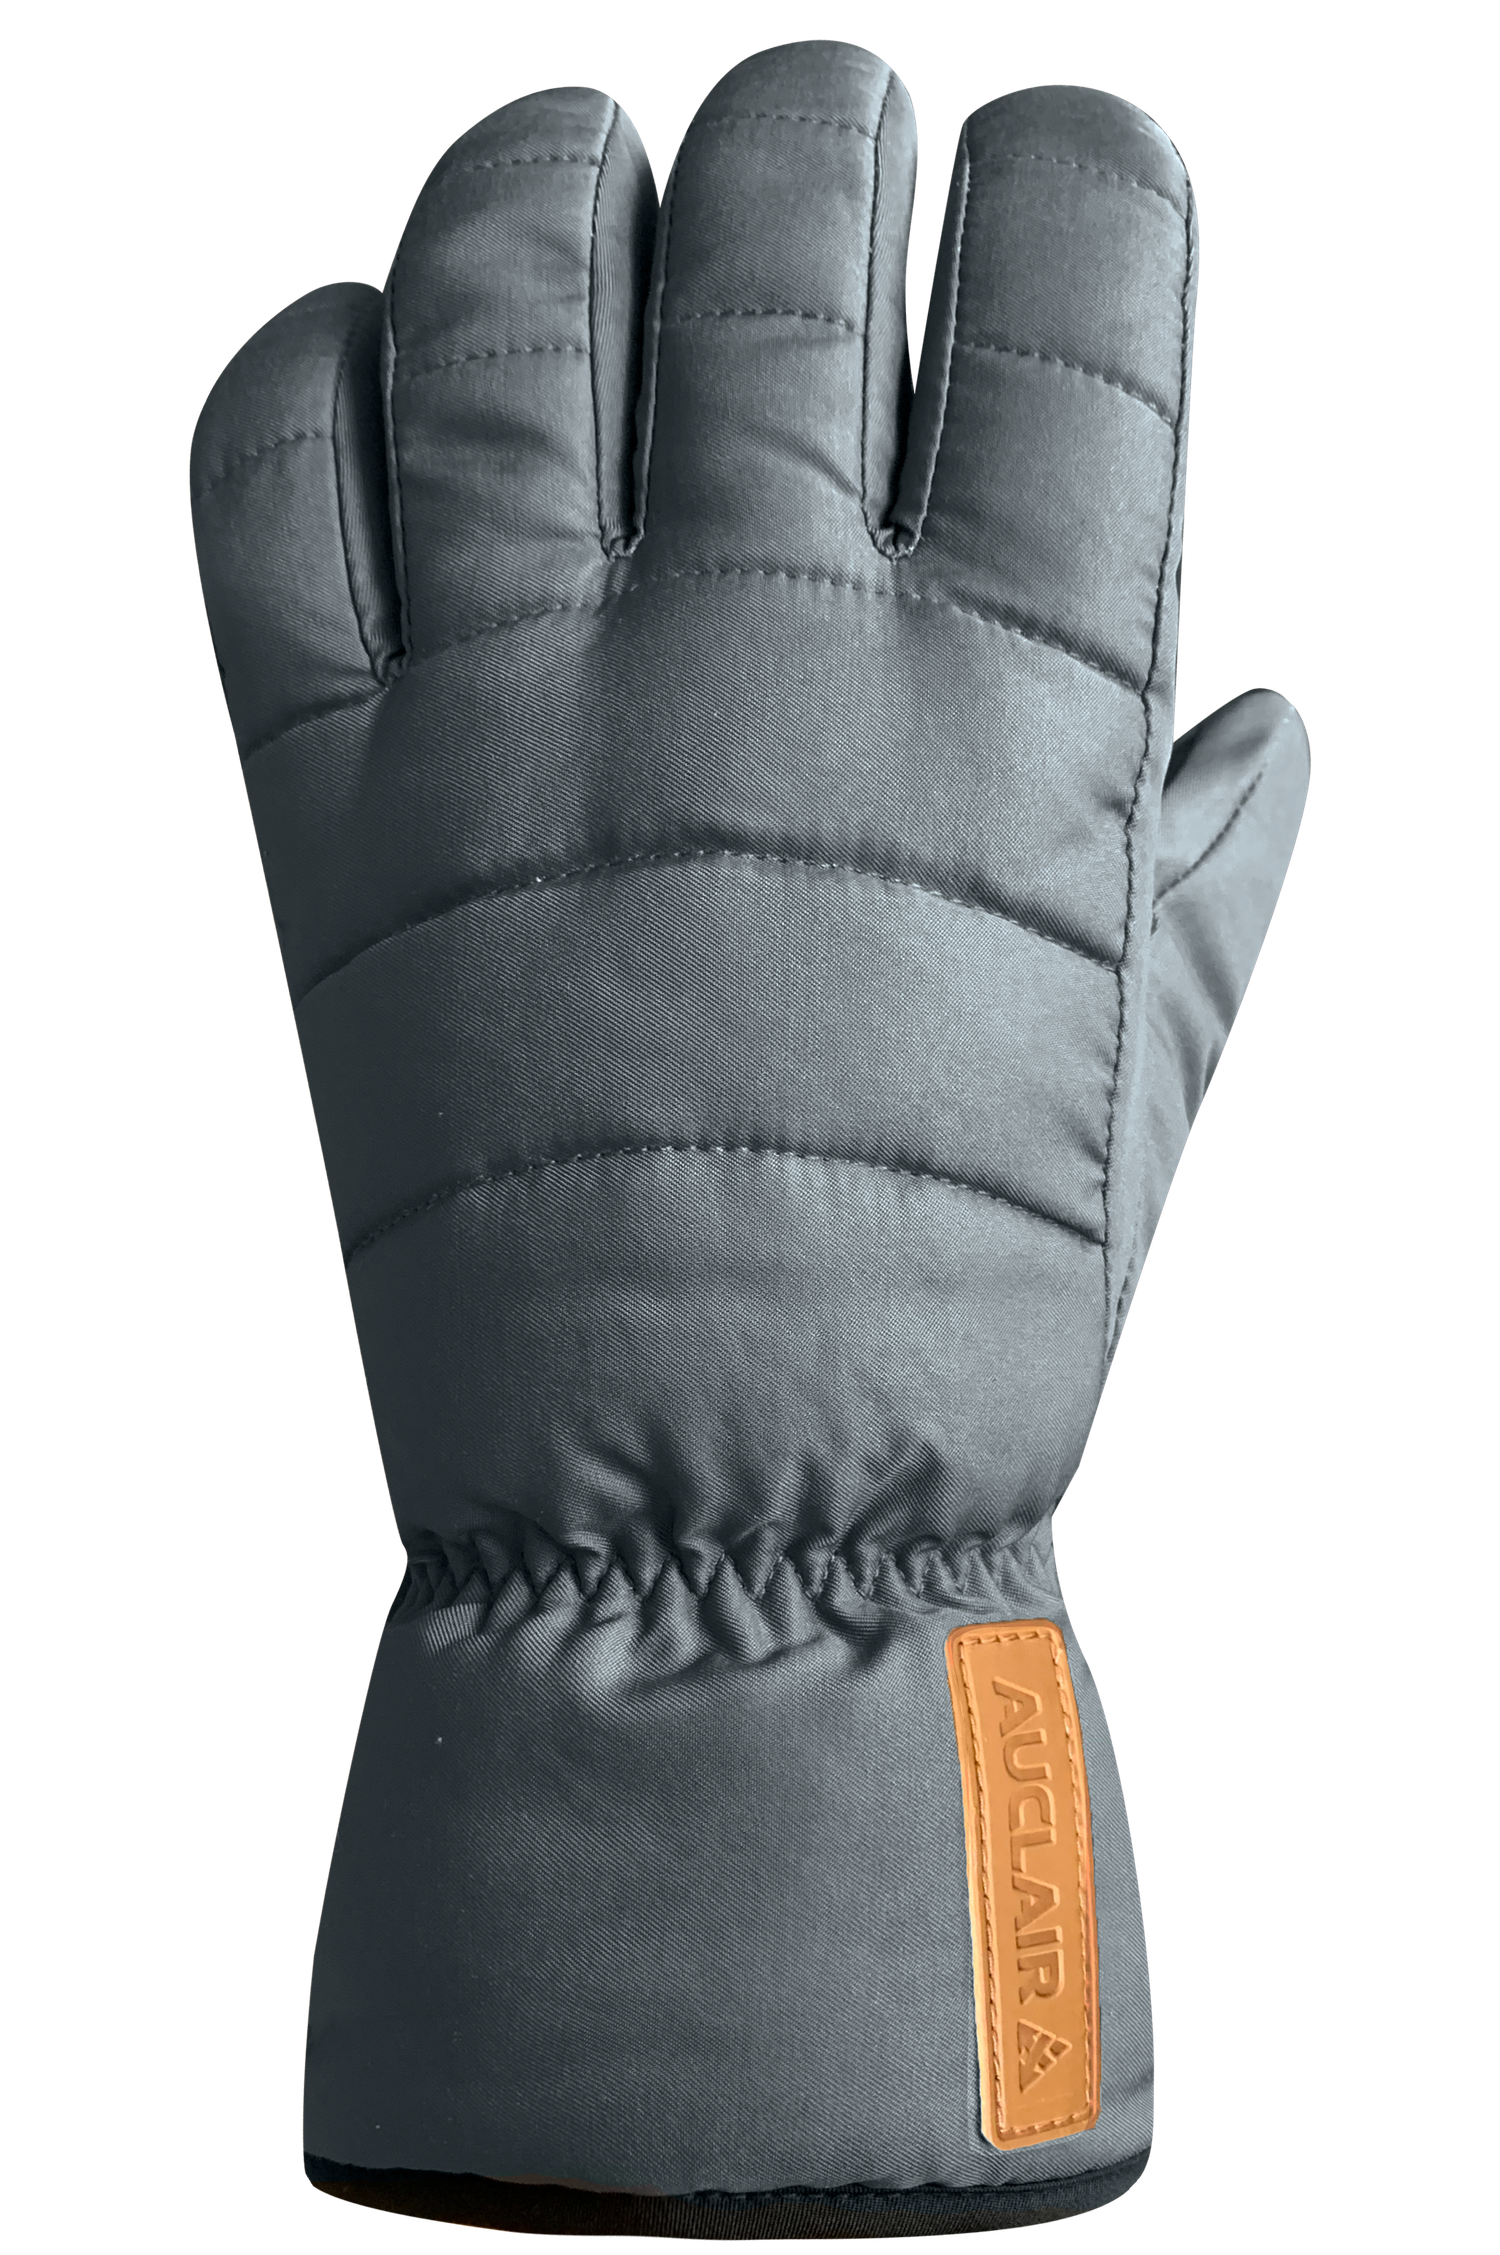 Retro Gloves - Women, Grey/Black